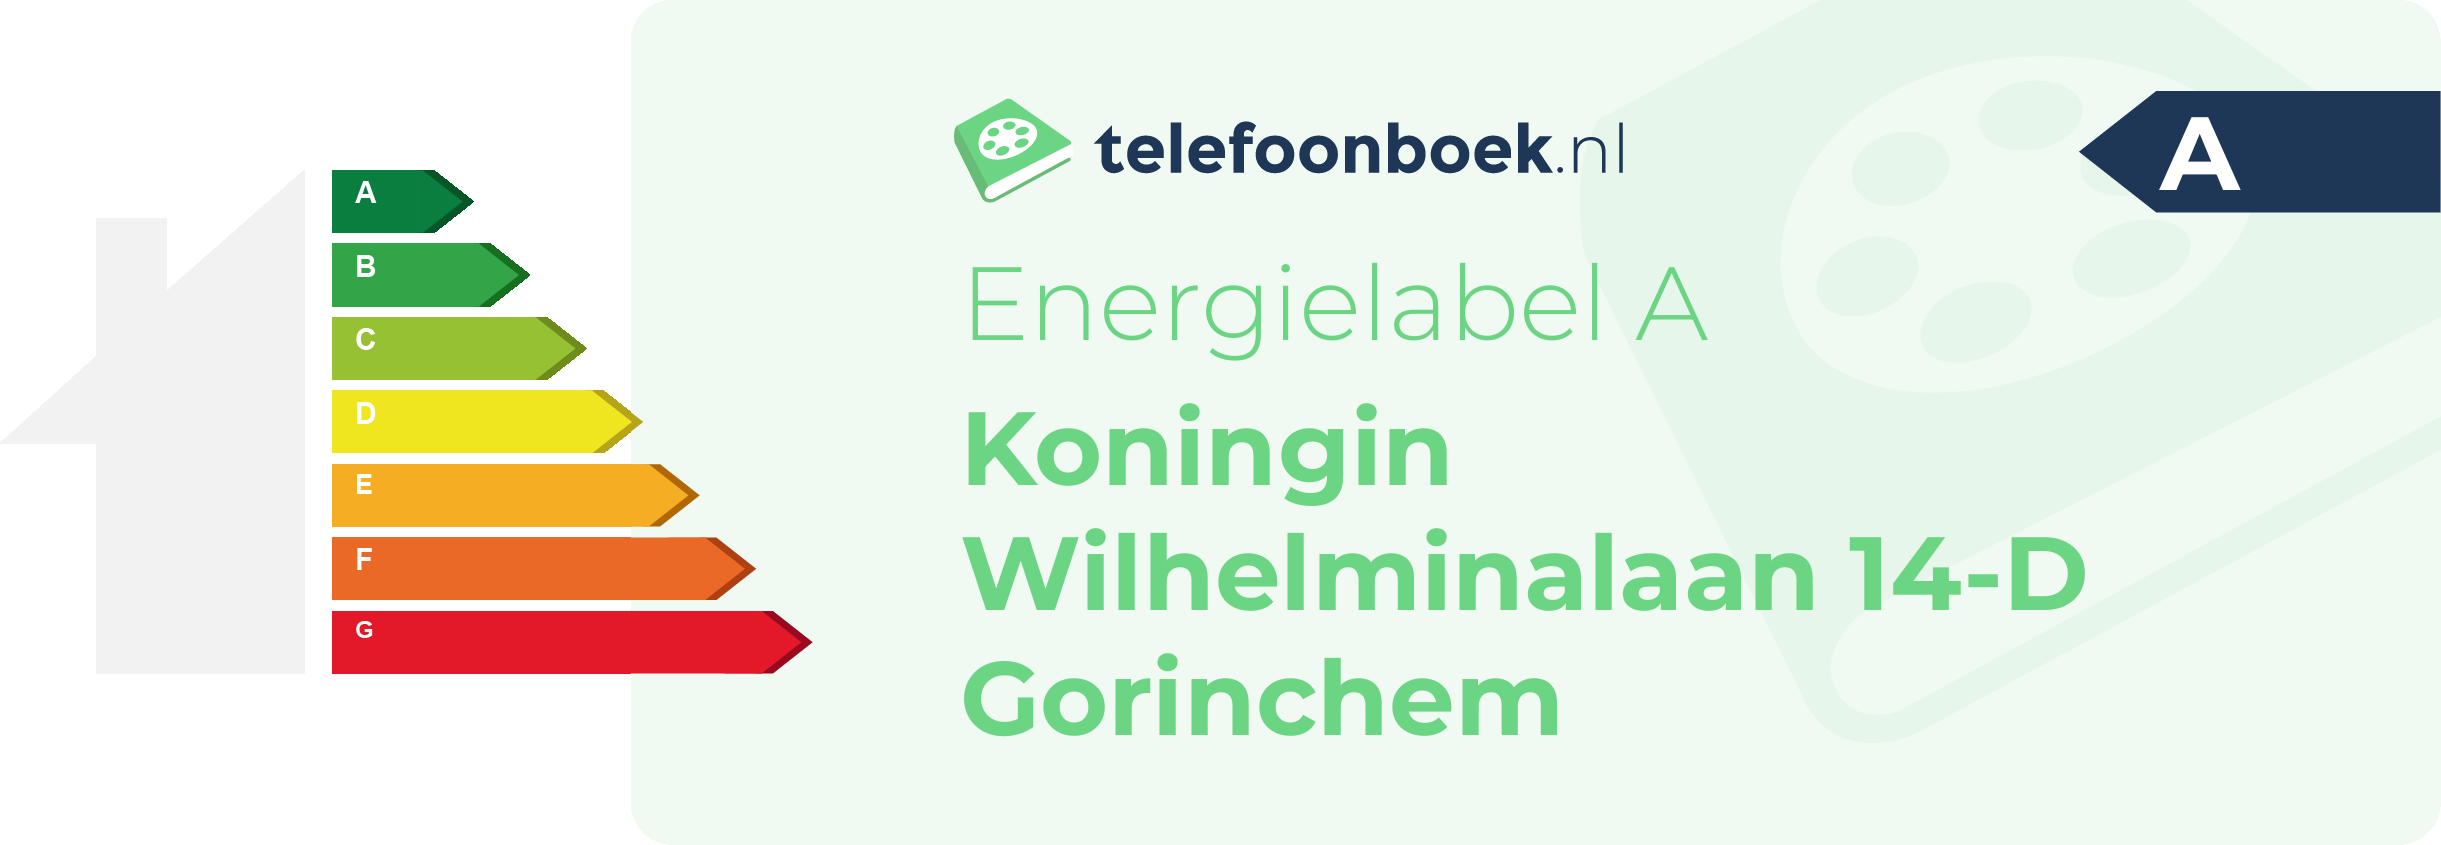 Energielabel Koningin Wilhelminalaan 14-D Gorinchem